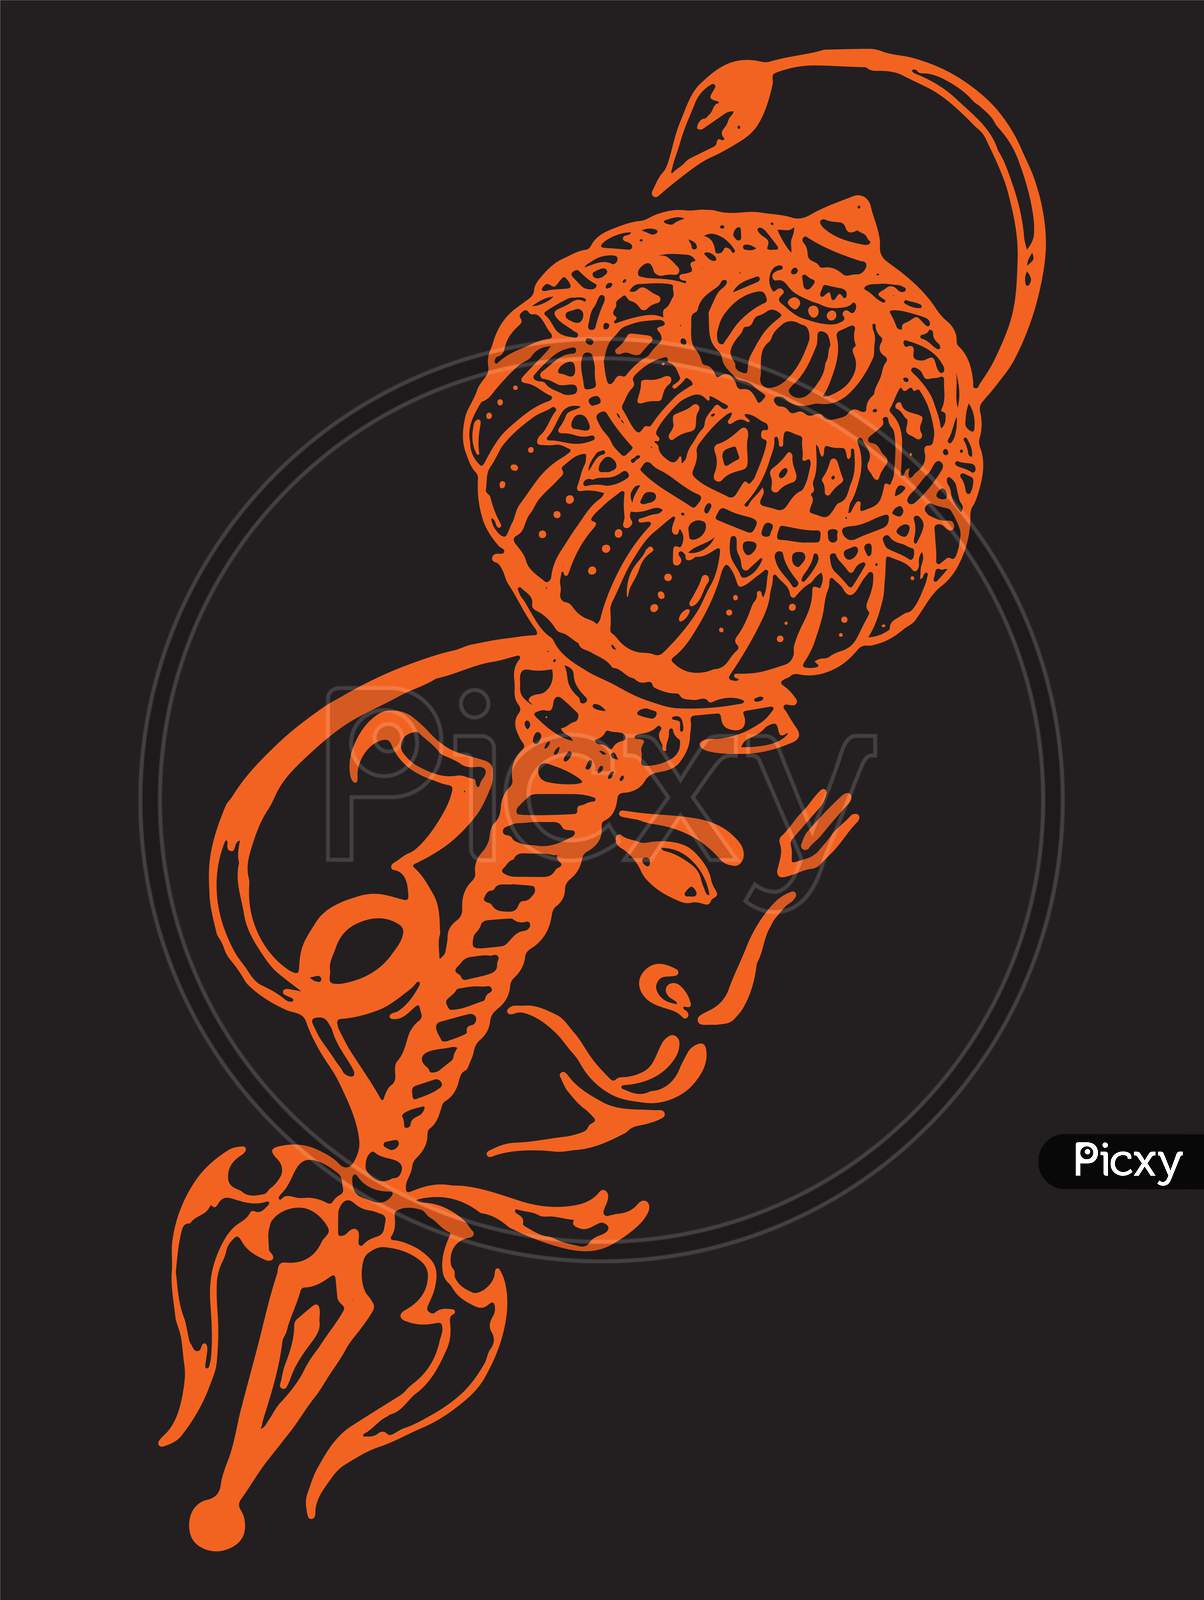 Sketch Of Lord Hanuman Face And Mace Or Bhajarangabali Sign And Symbols Outline Editable Illustration